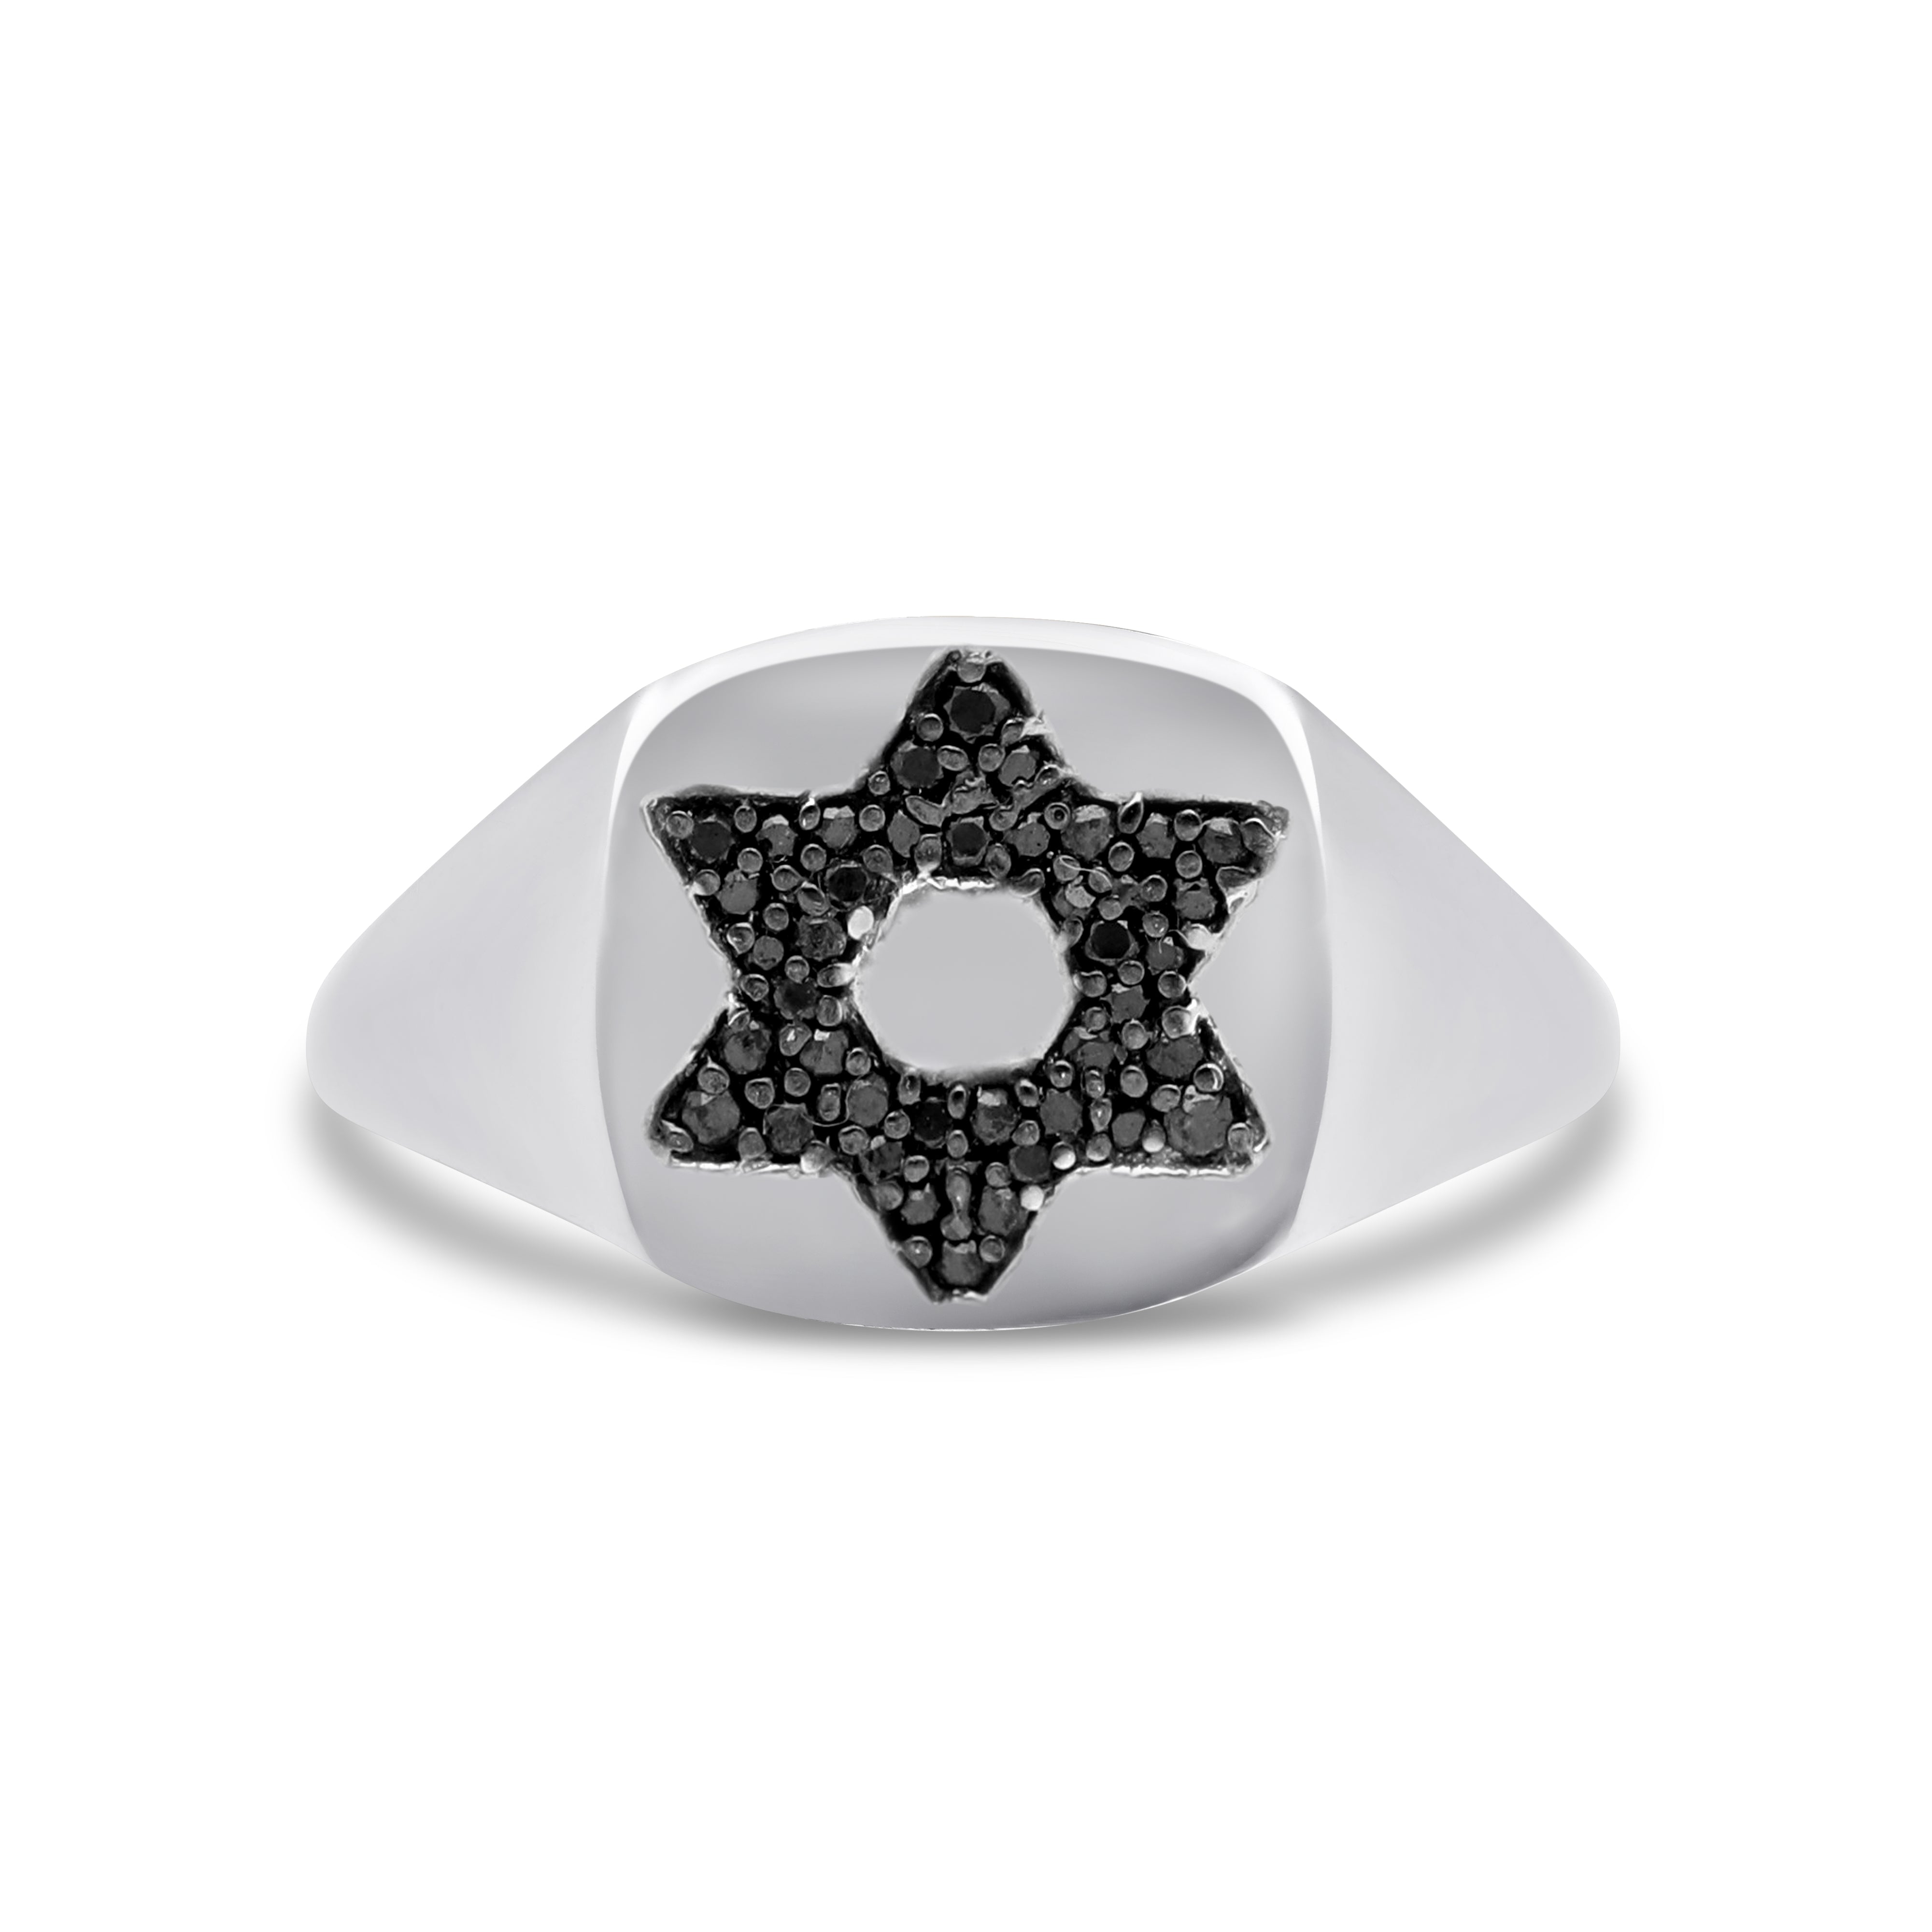 The Black Diamond Mazel Signet Pinky Ring